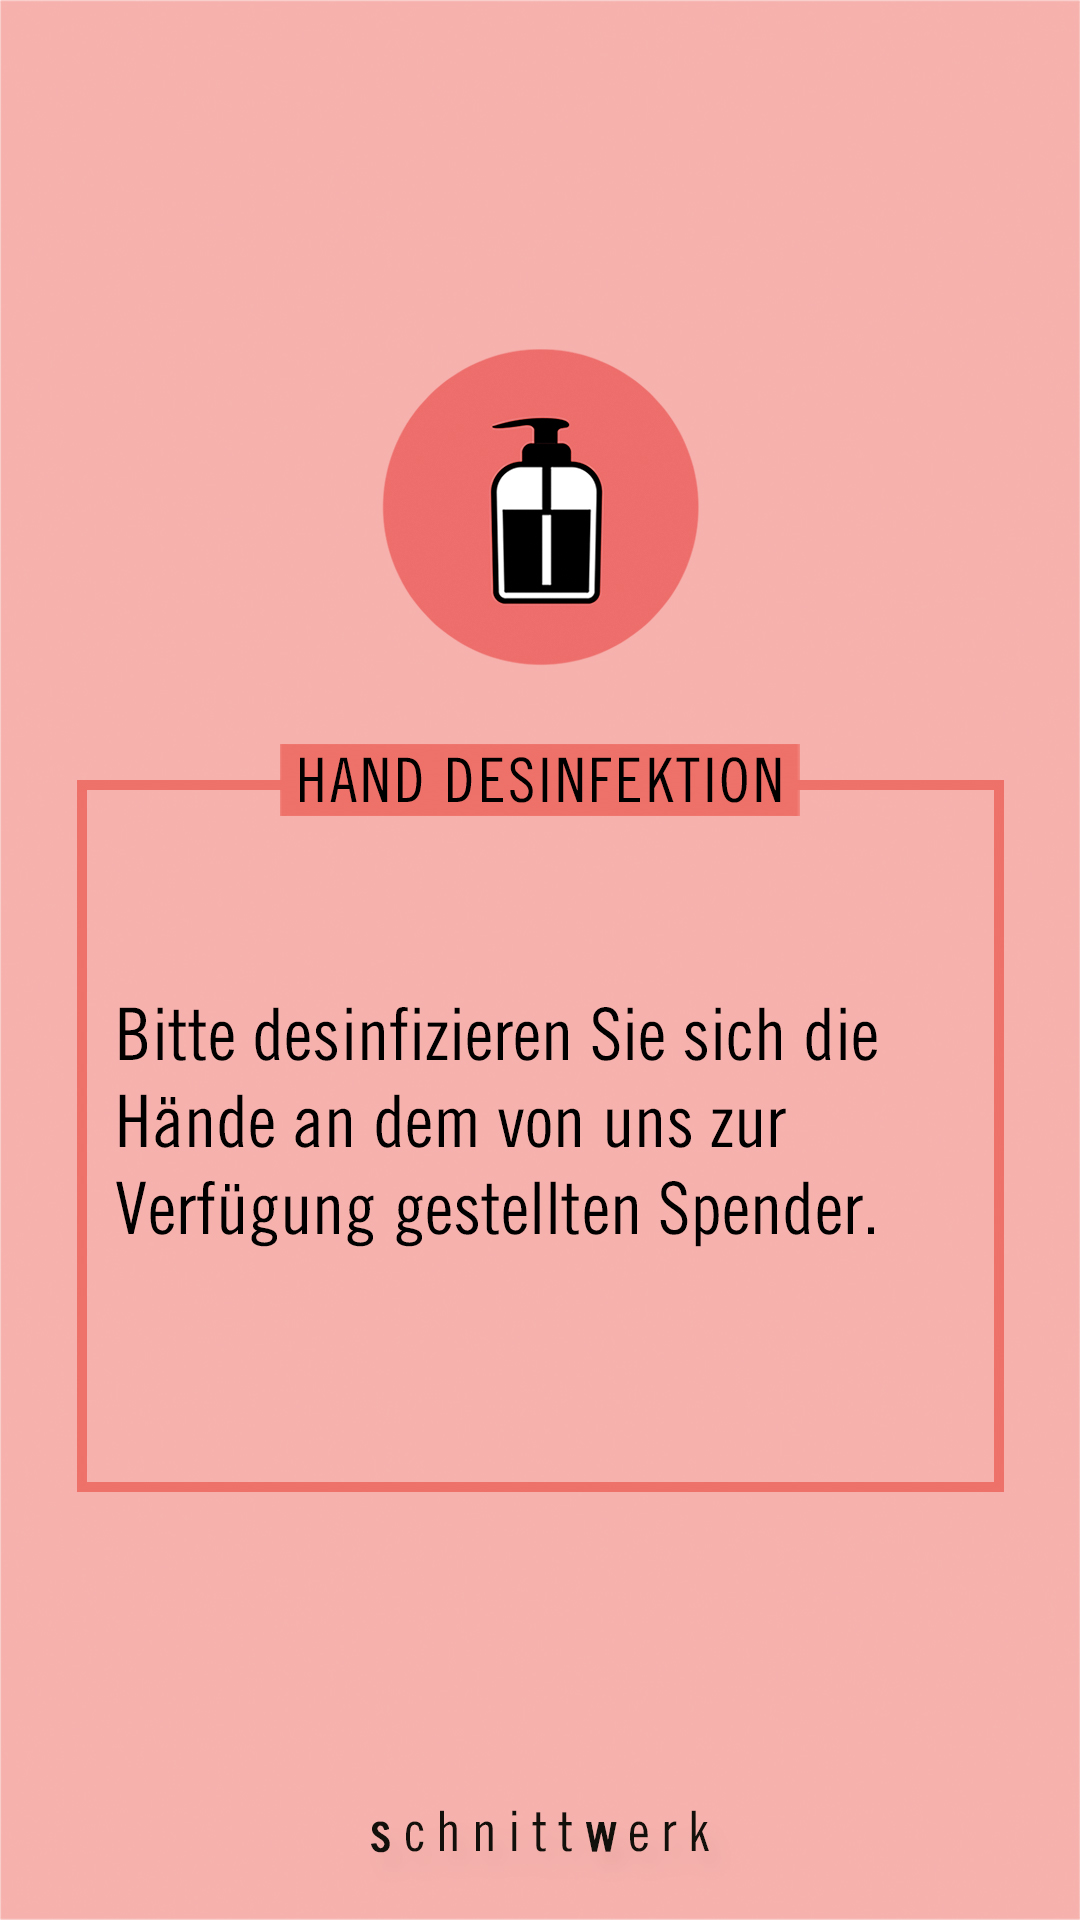 2-Hand Desinfektion